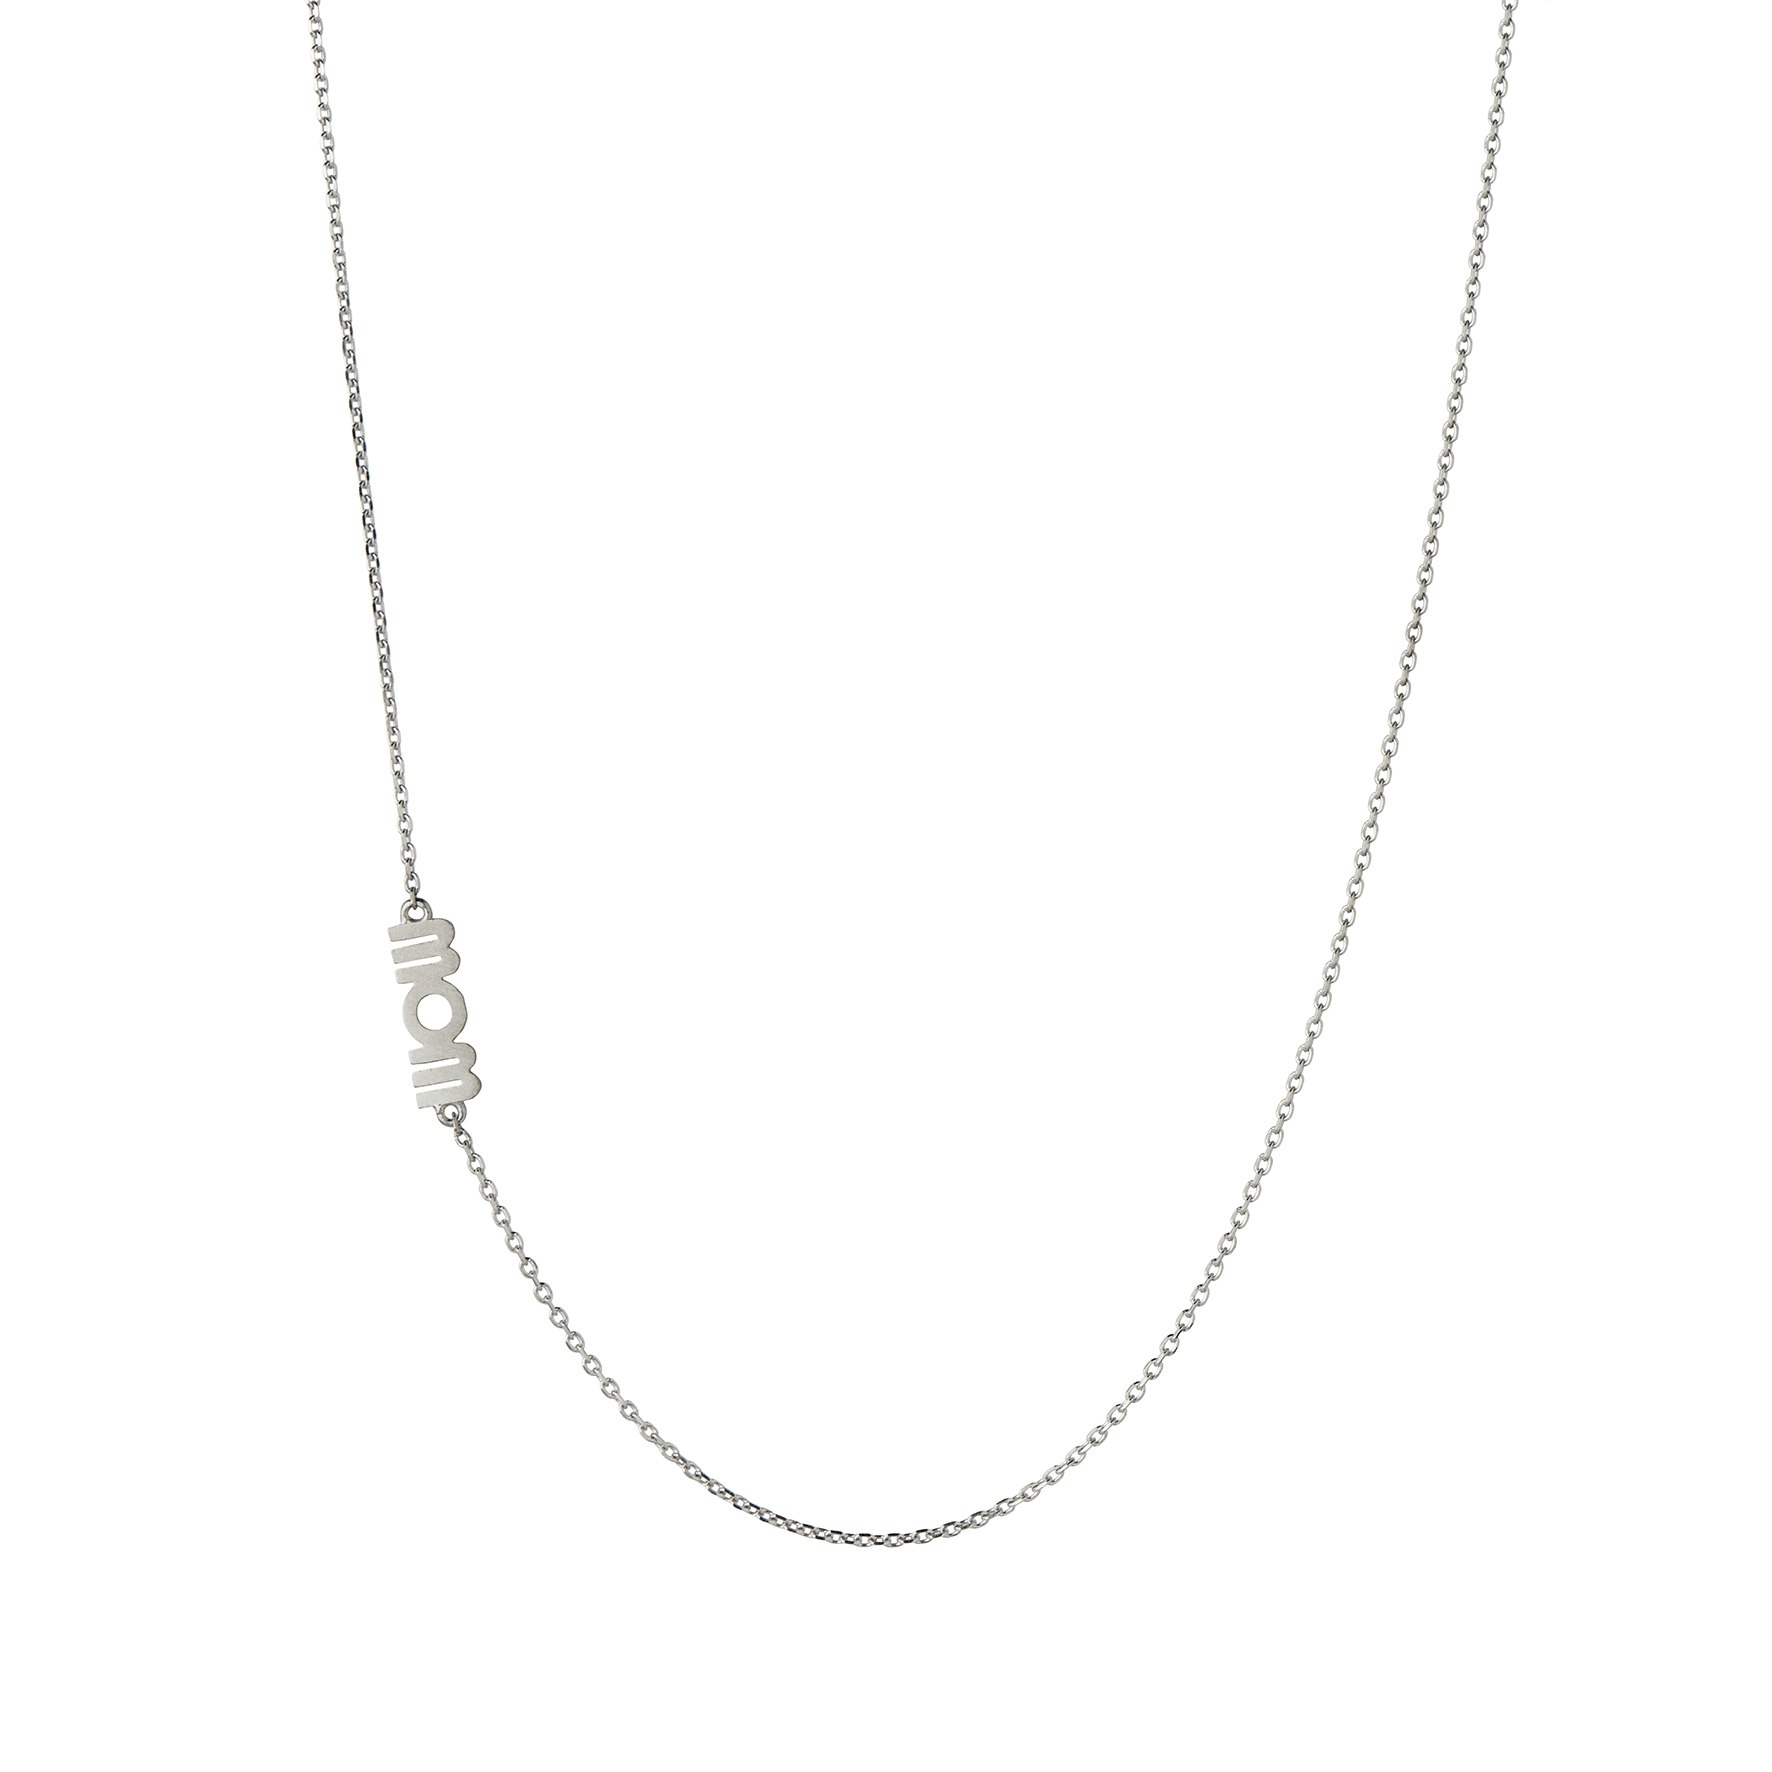 Wow Mom Necklace från STINE A Jewelry i Silver Sterling 925